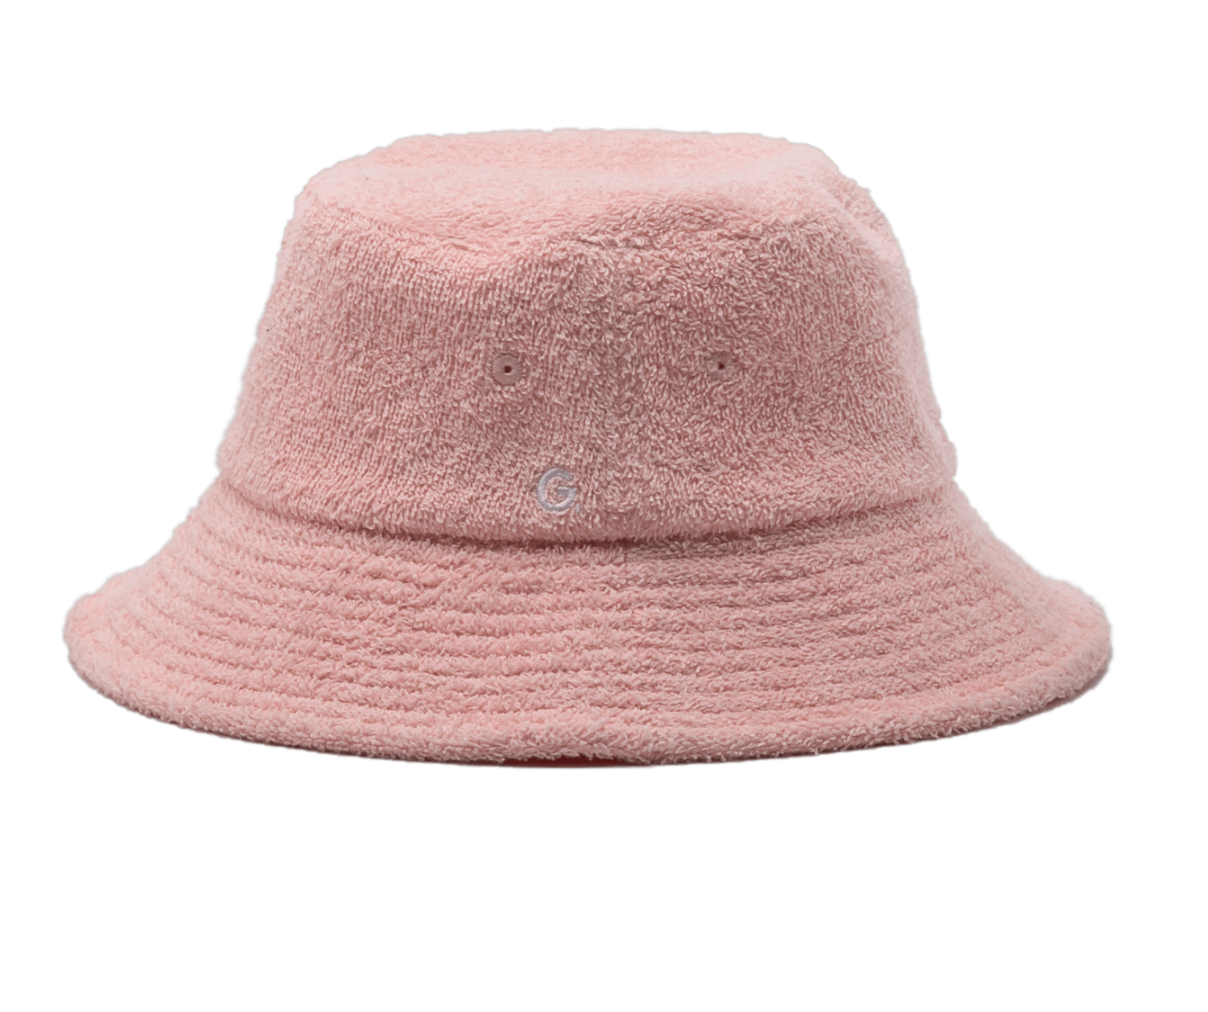 terry cloth bucket hat